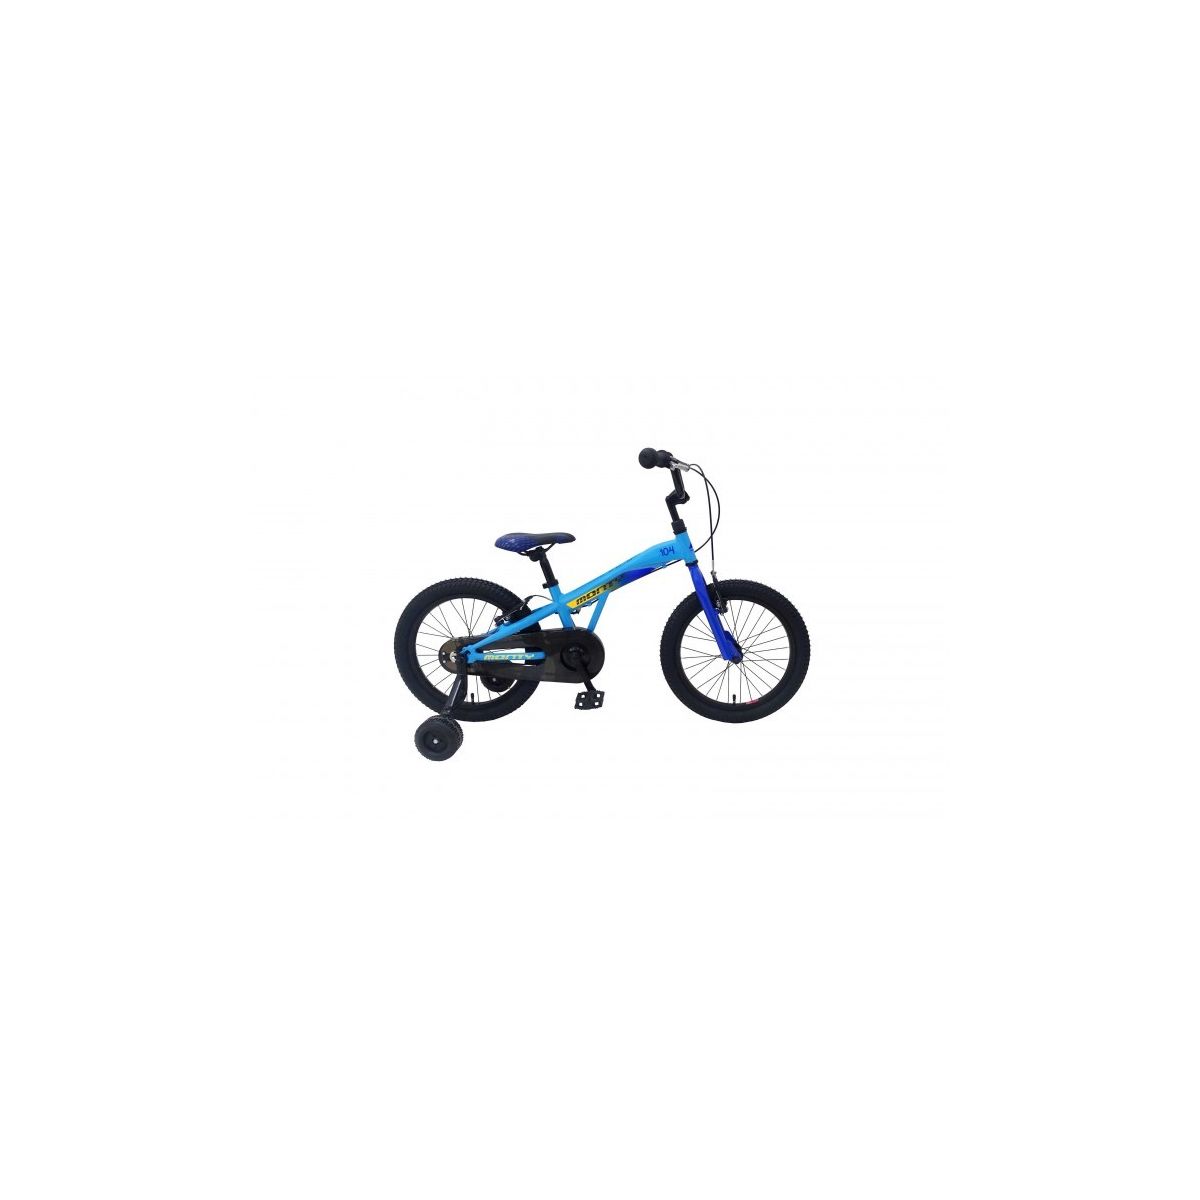 Bicicleta niño Monty 104 (4 a 6 años) | color azul | bicicleta infantil | the bike village | mataró